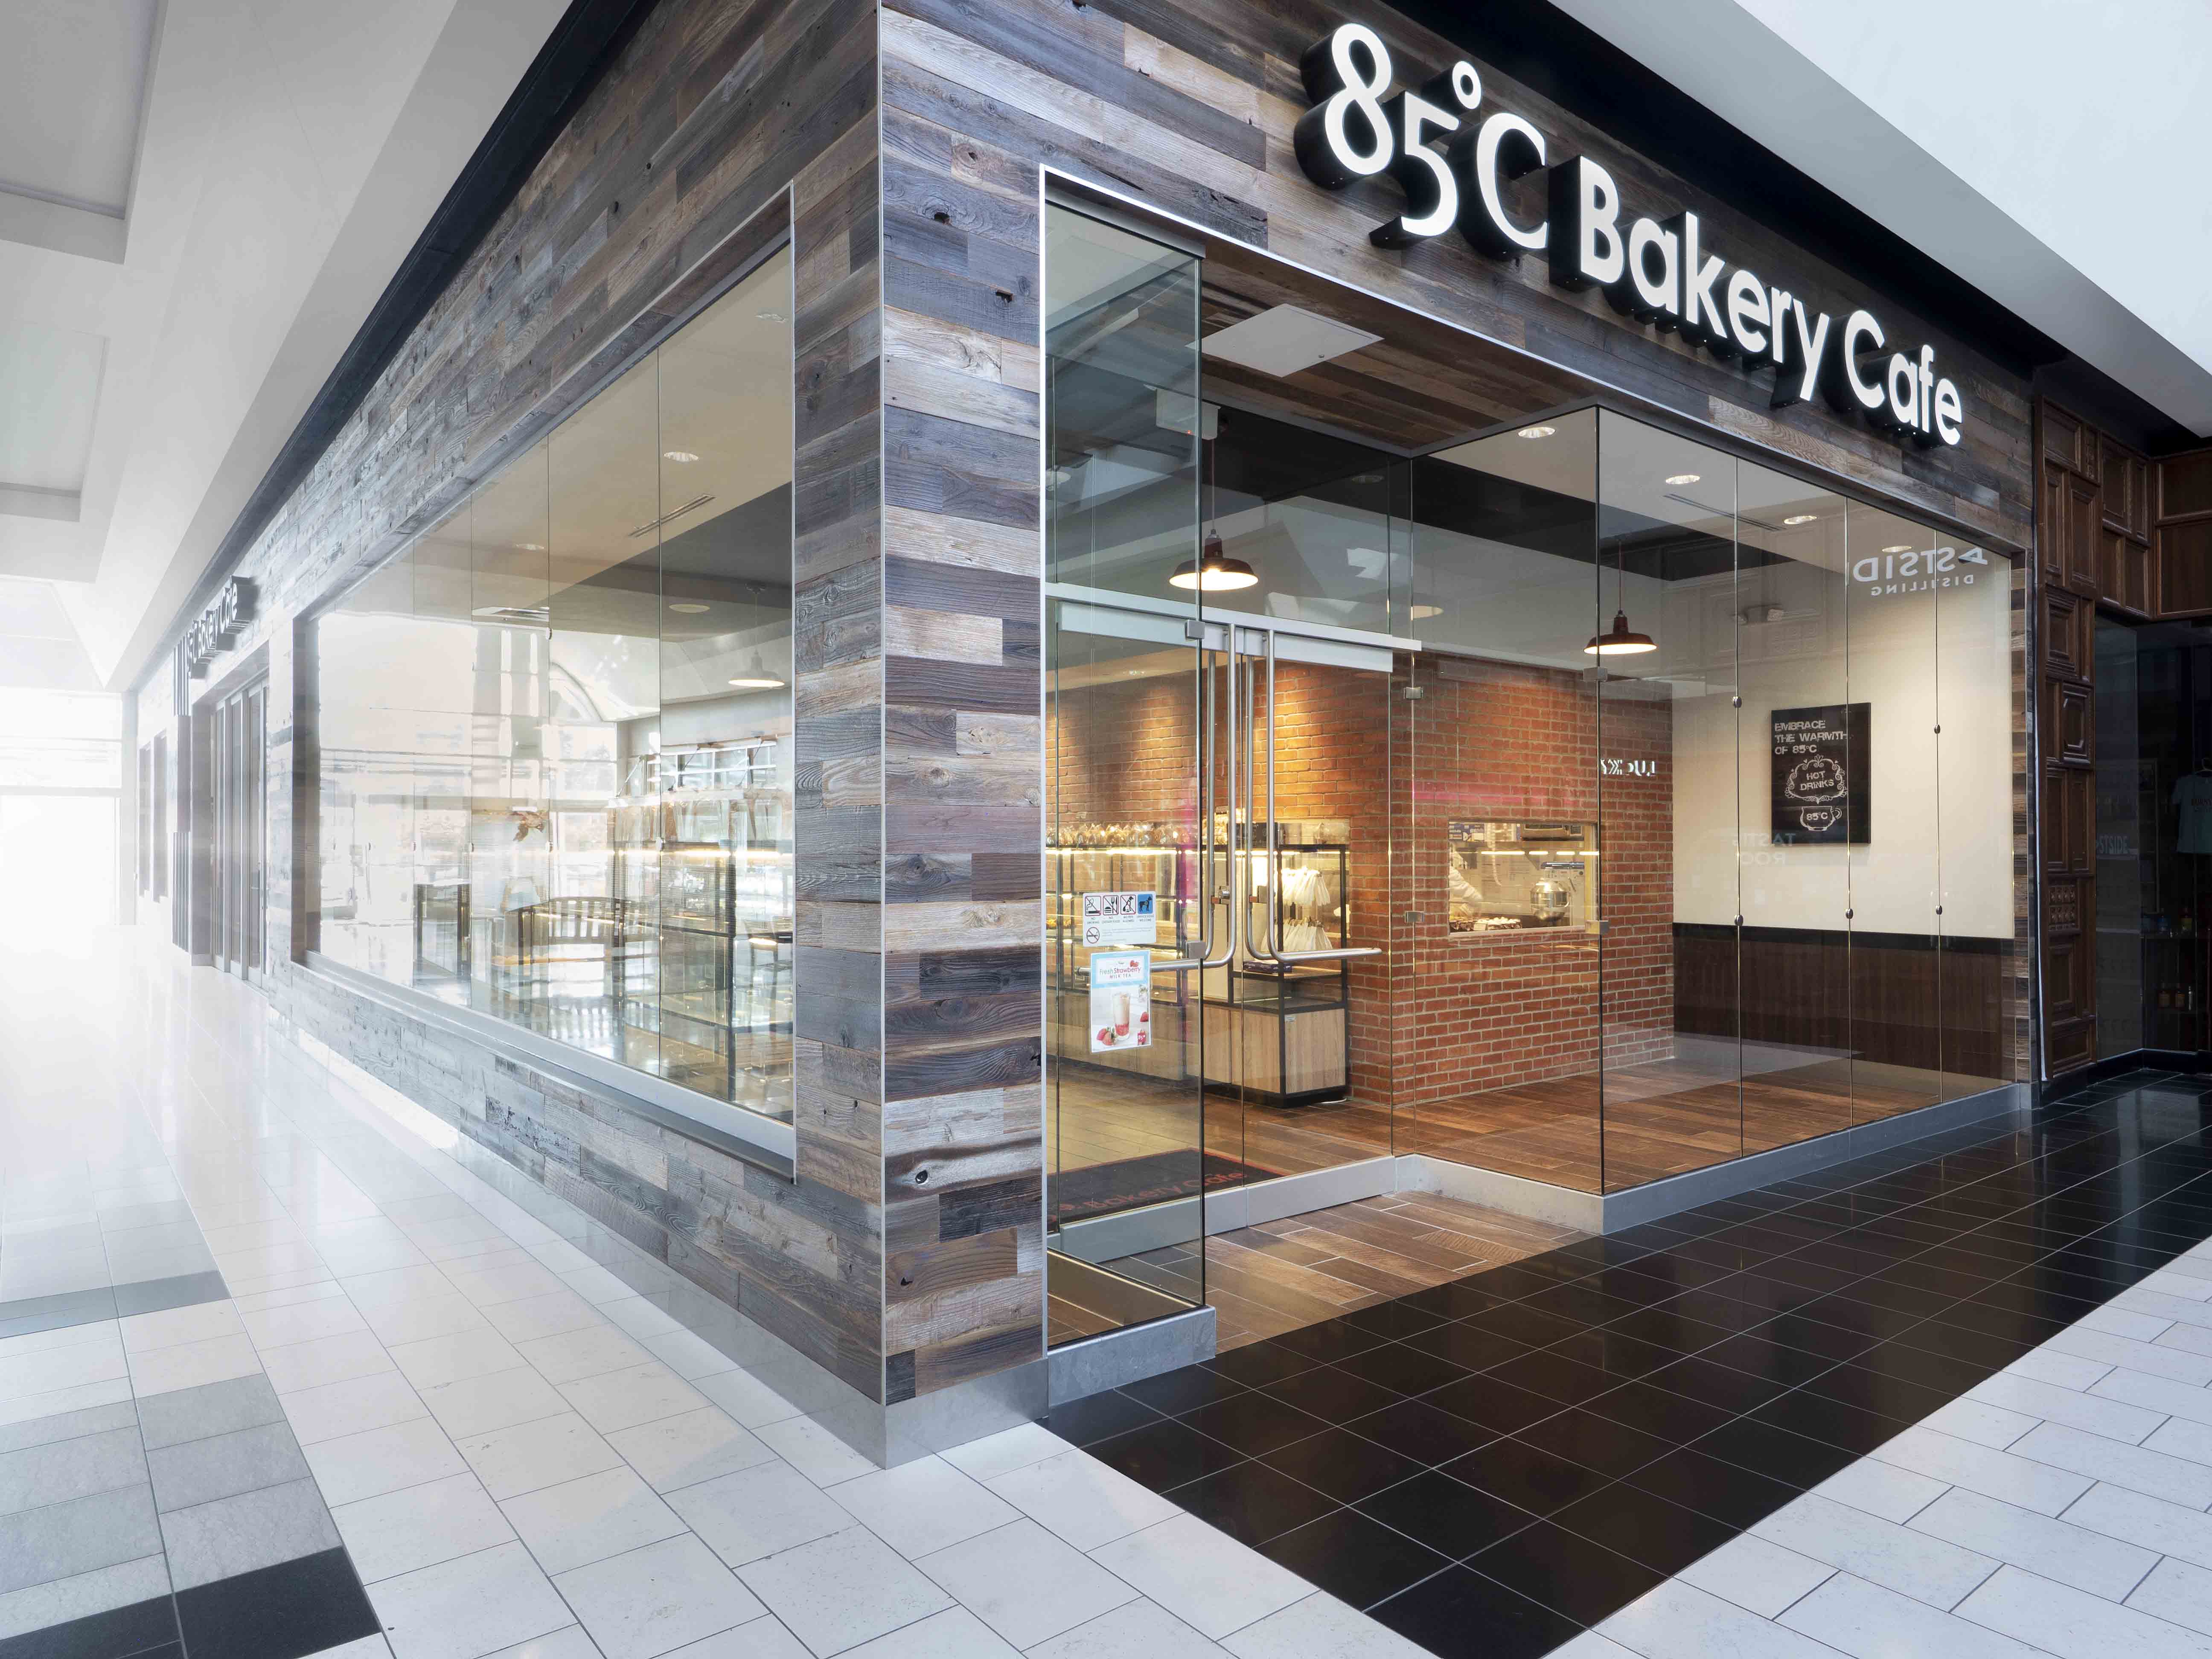 85C Bakery-Washington Sq